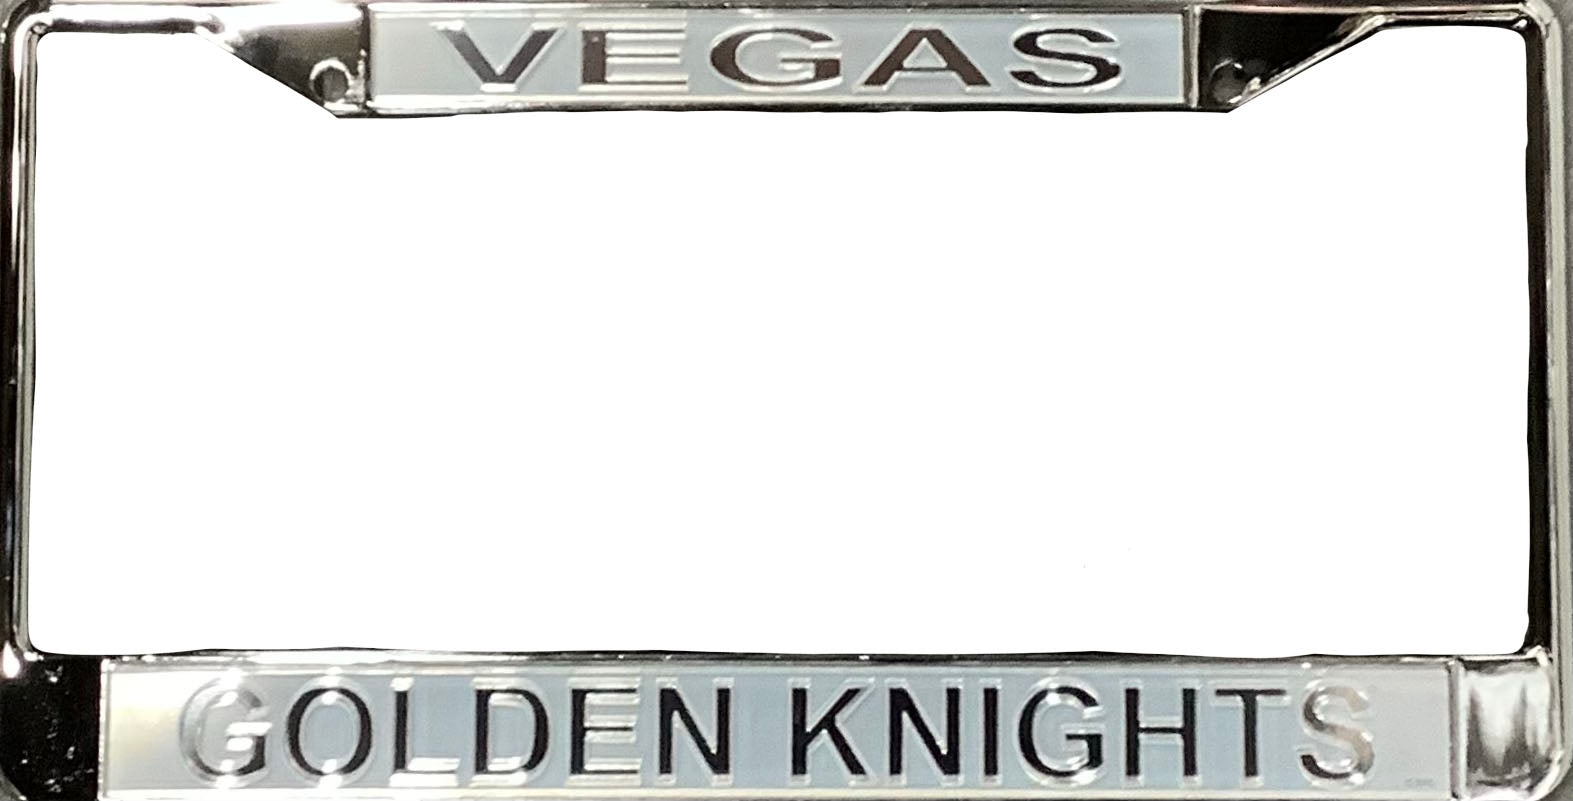 Vegas Golden Knights License Plate Frame